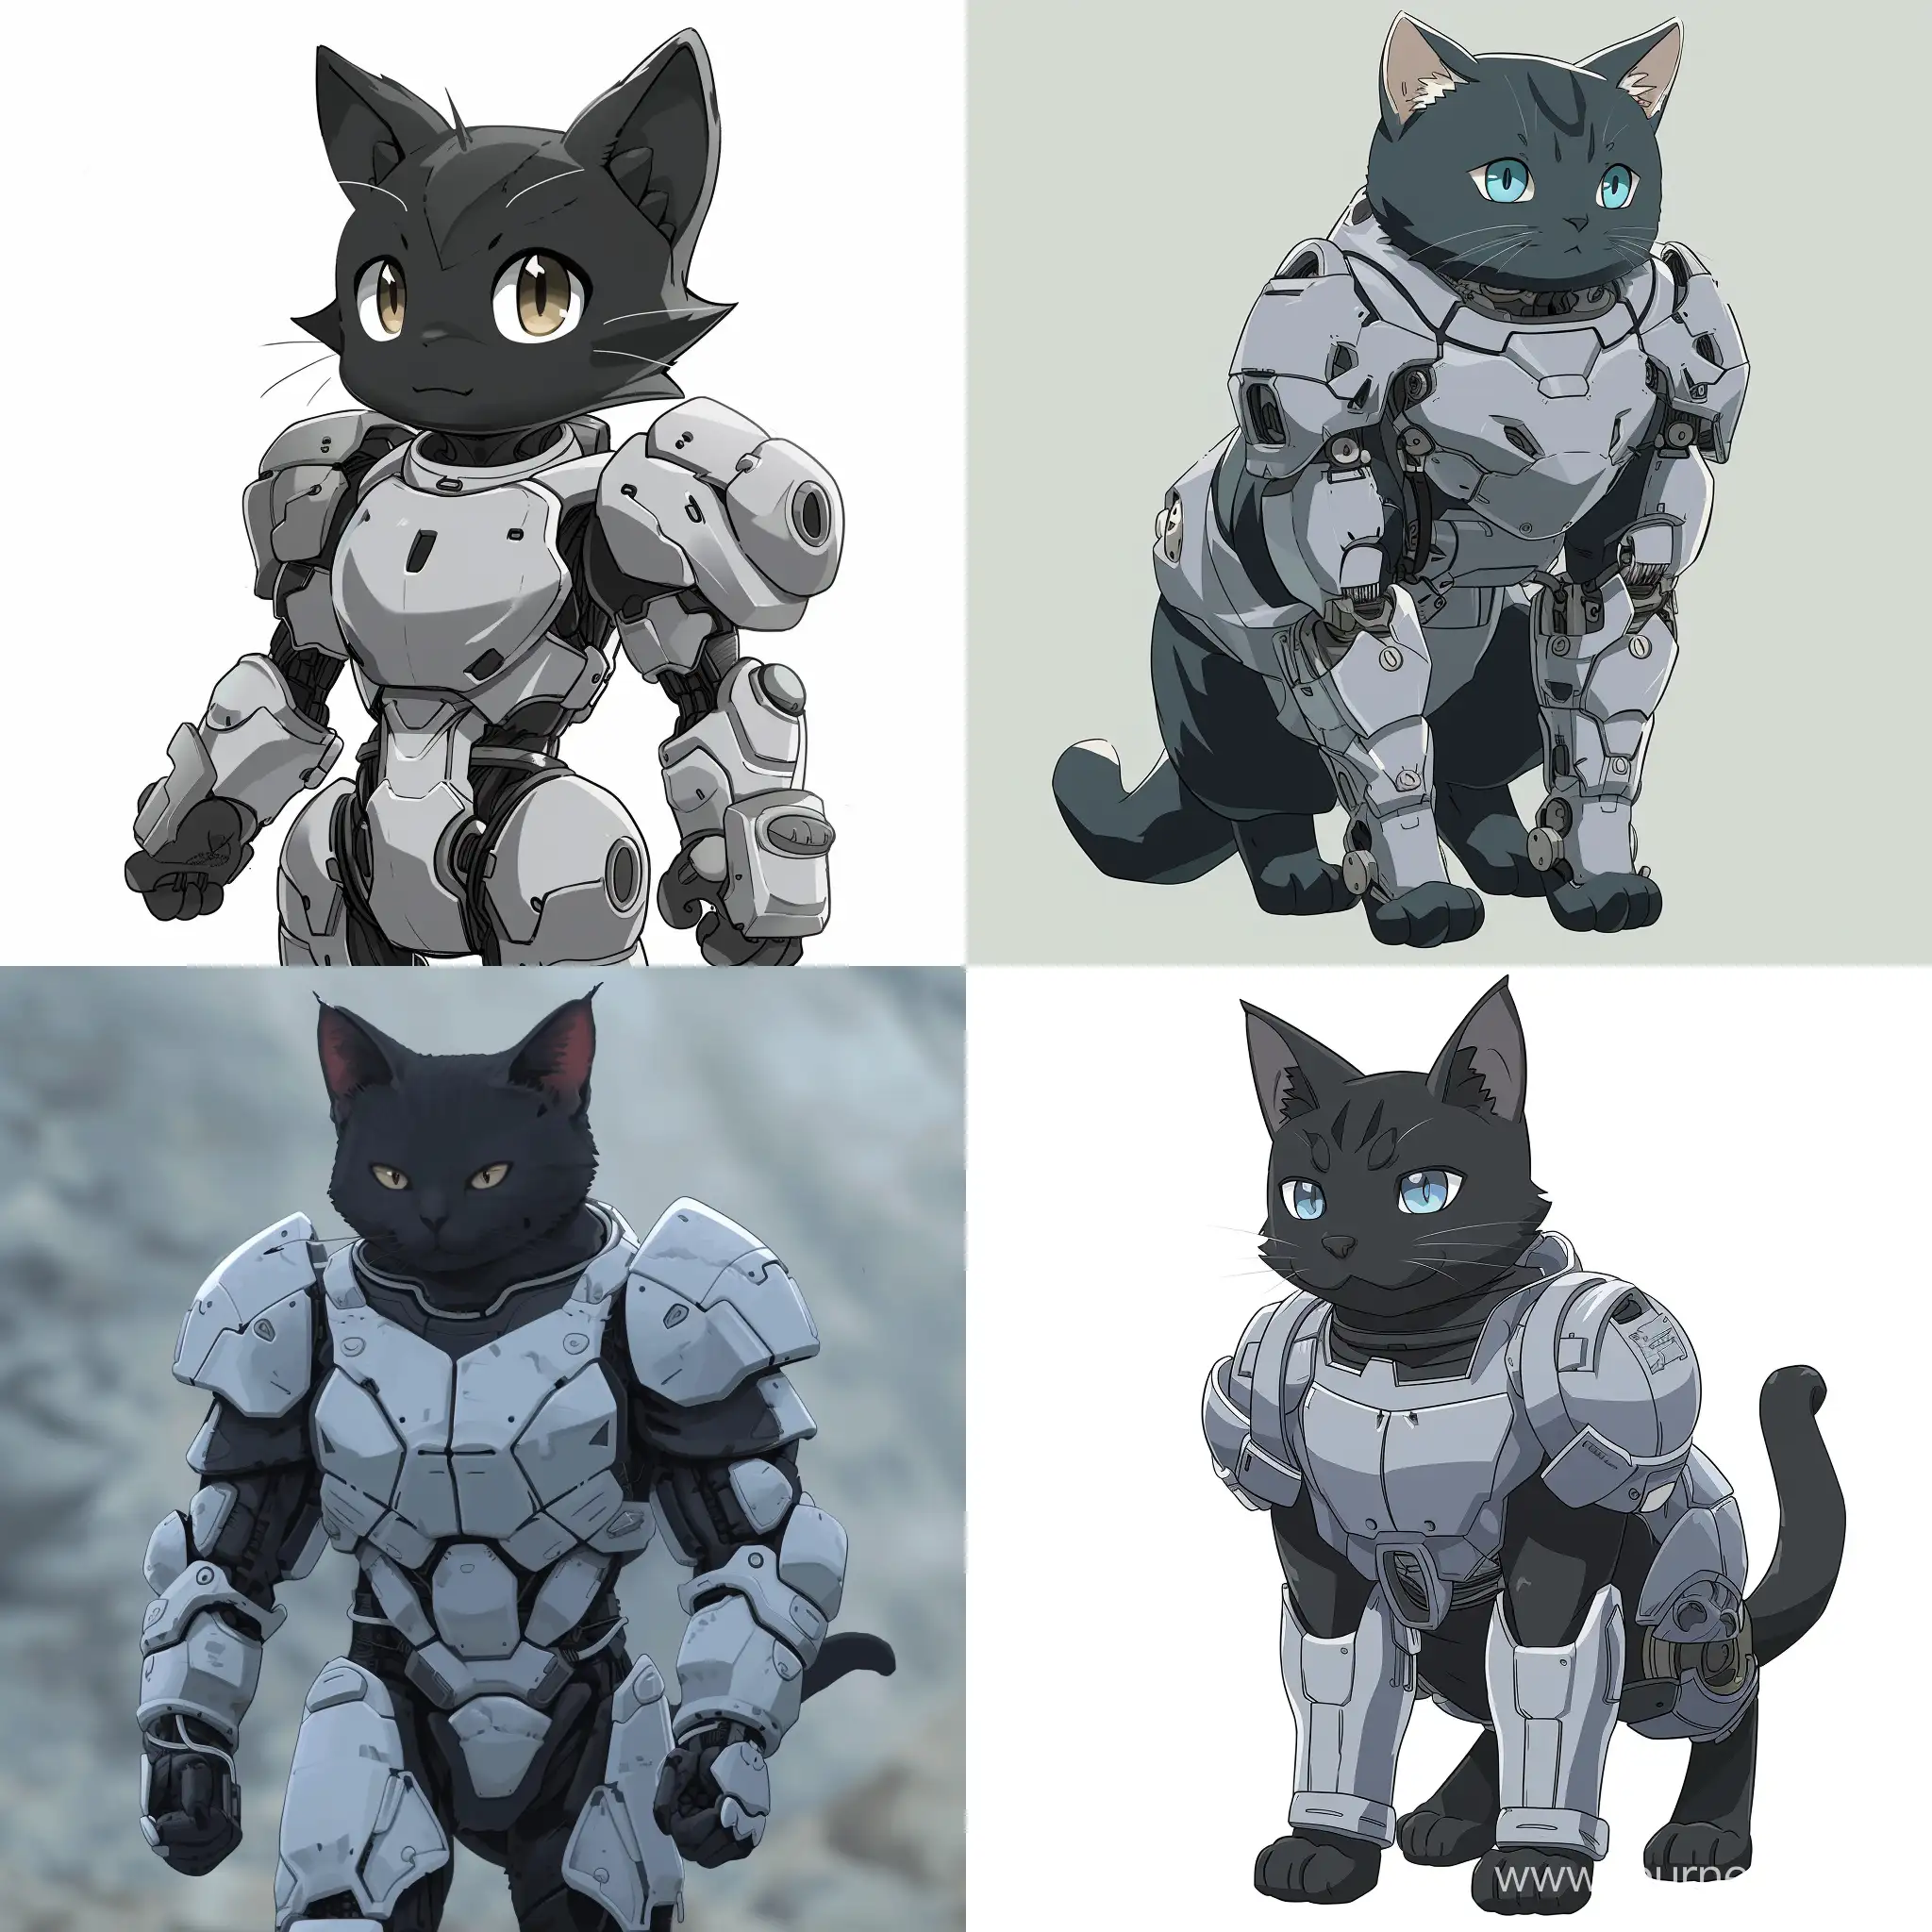 Anthropomorphic-Cat-in-Bionic-Armor-Anime-Style-Art